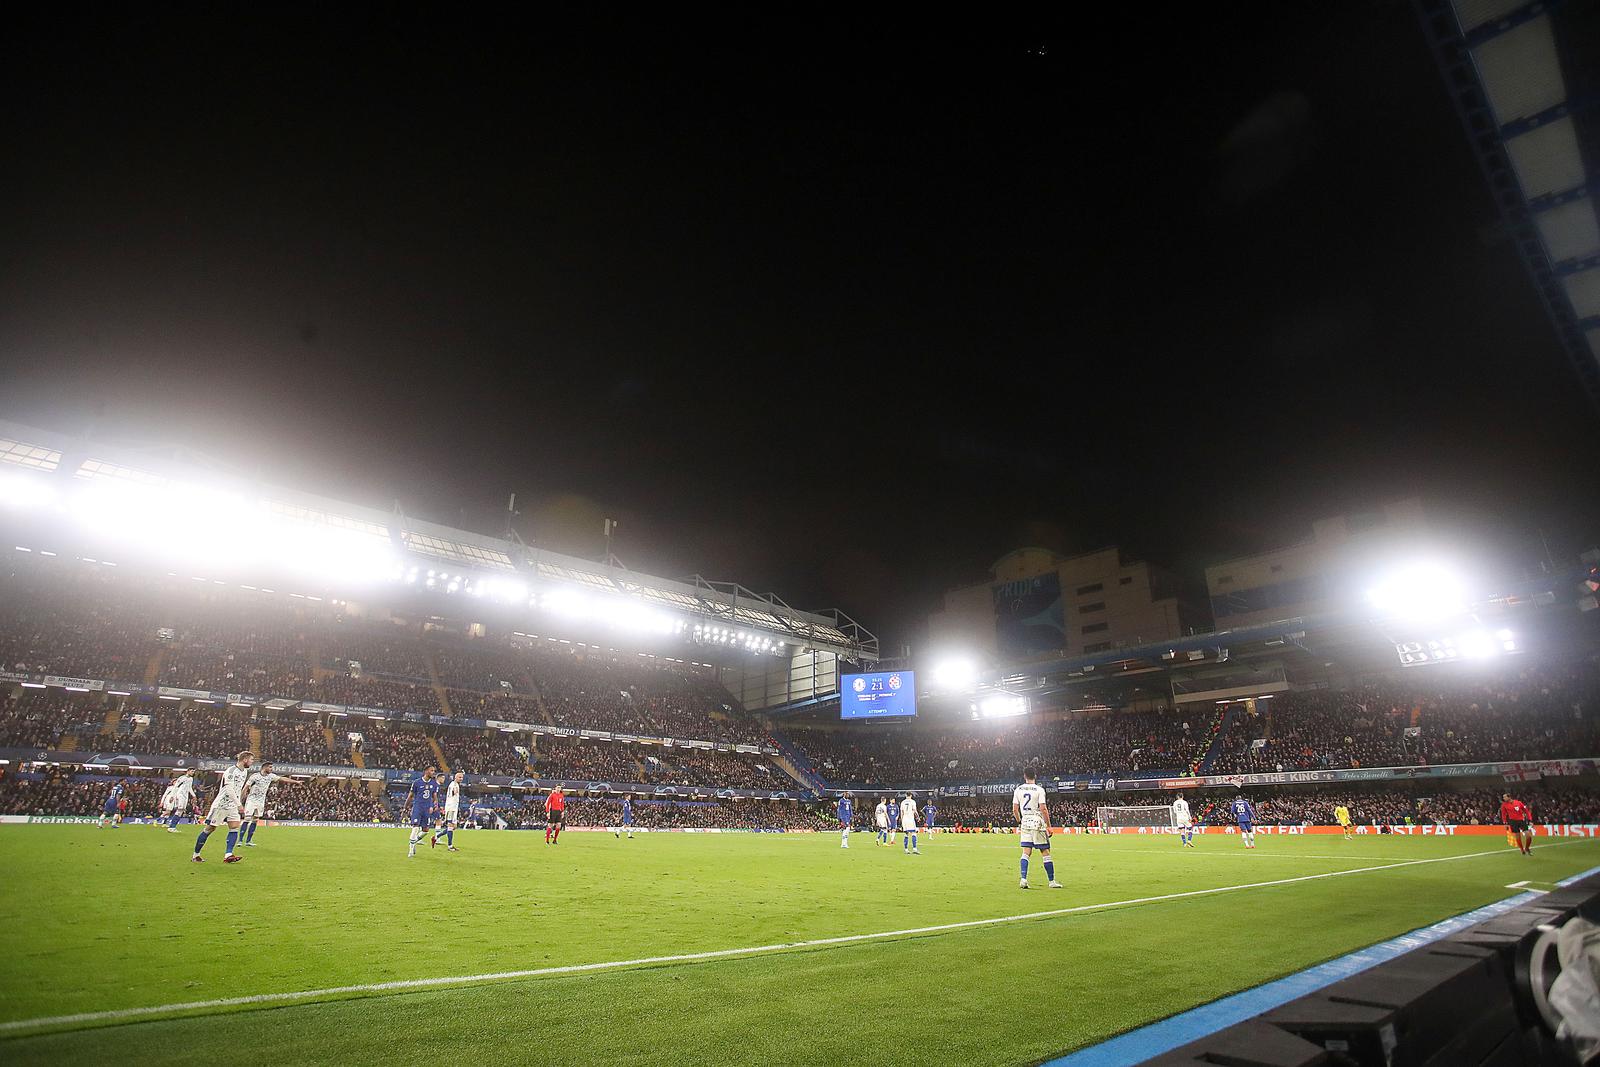 02.11.2022., stadion Stamford Bridge, London, Engleska - UEFA Liga prvaka, 6. kolo, skupina E, Chelsea - GNK Dinamo.  Photo: Luka Stanzl/PIXSELL